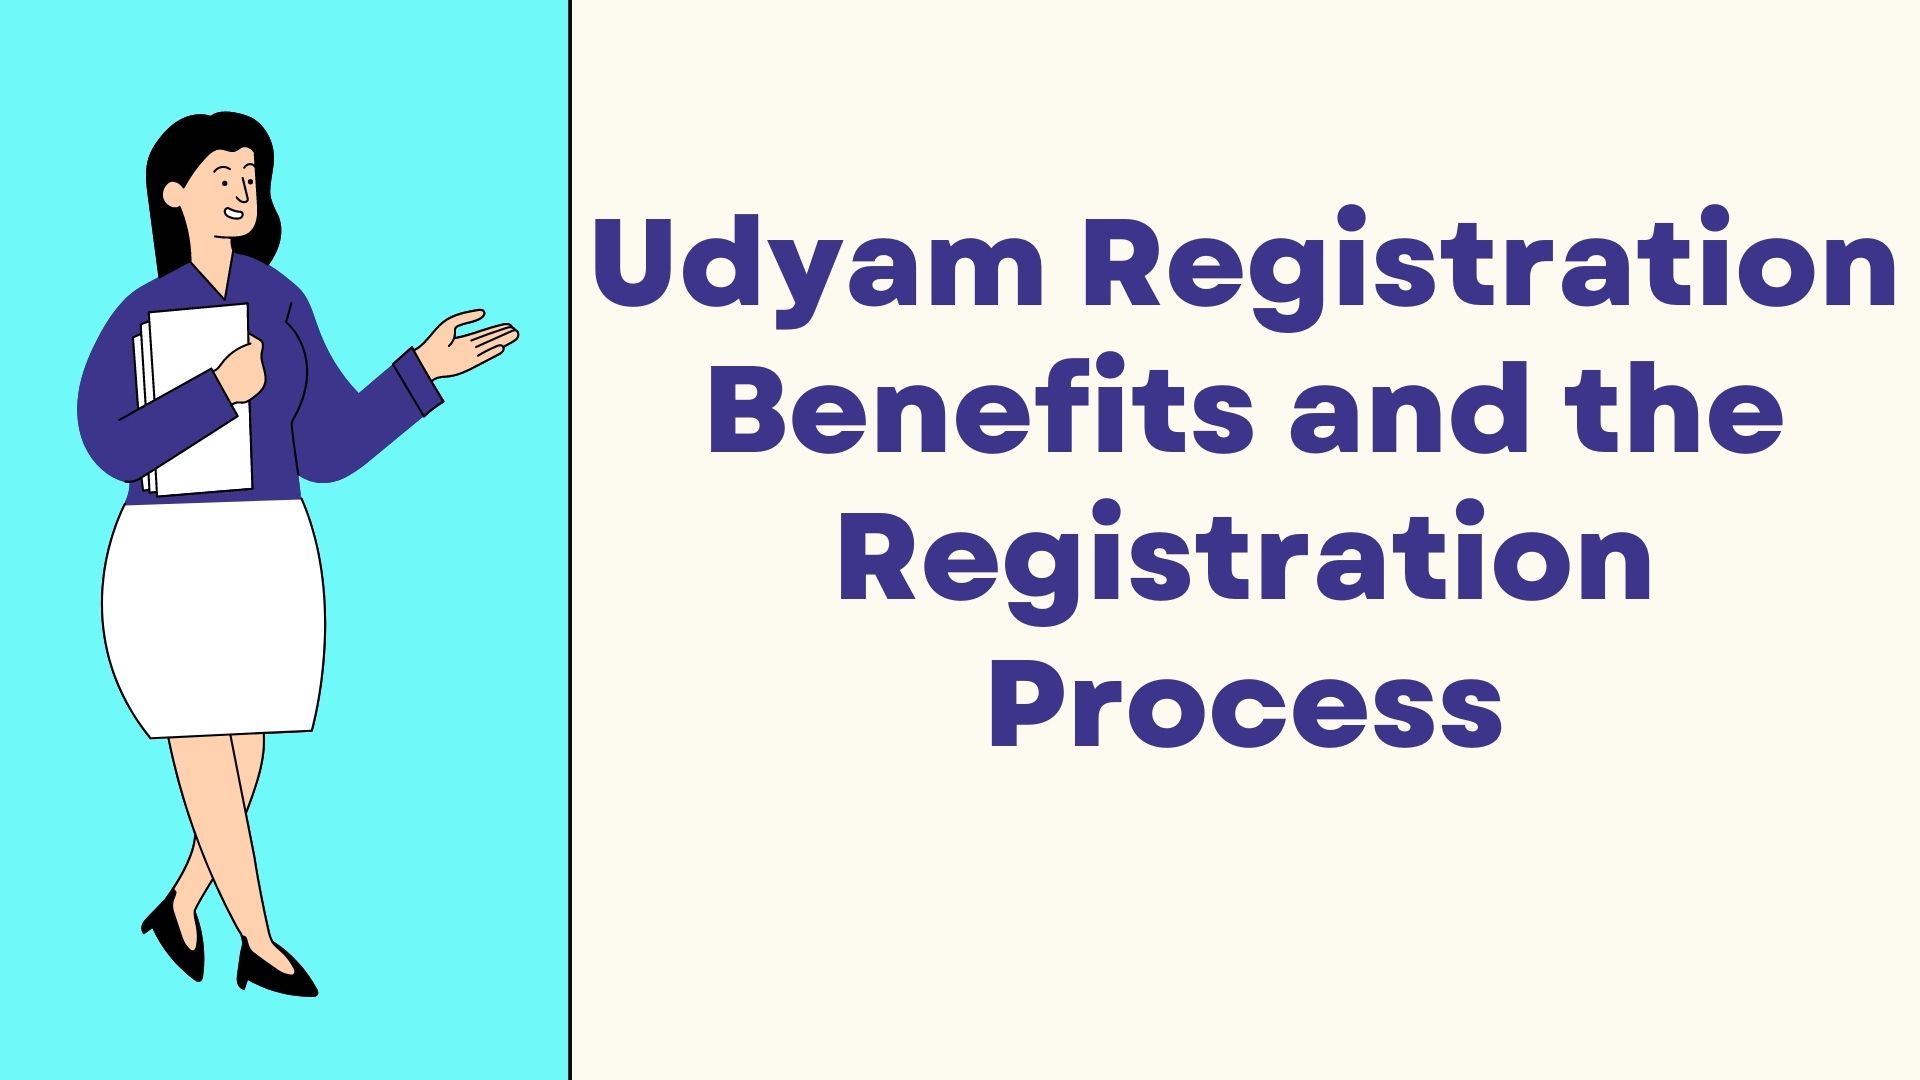 public/uploads/2022/01/Udyam-Registration-Benefits-and-the-Registration-Process.jpg